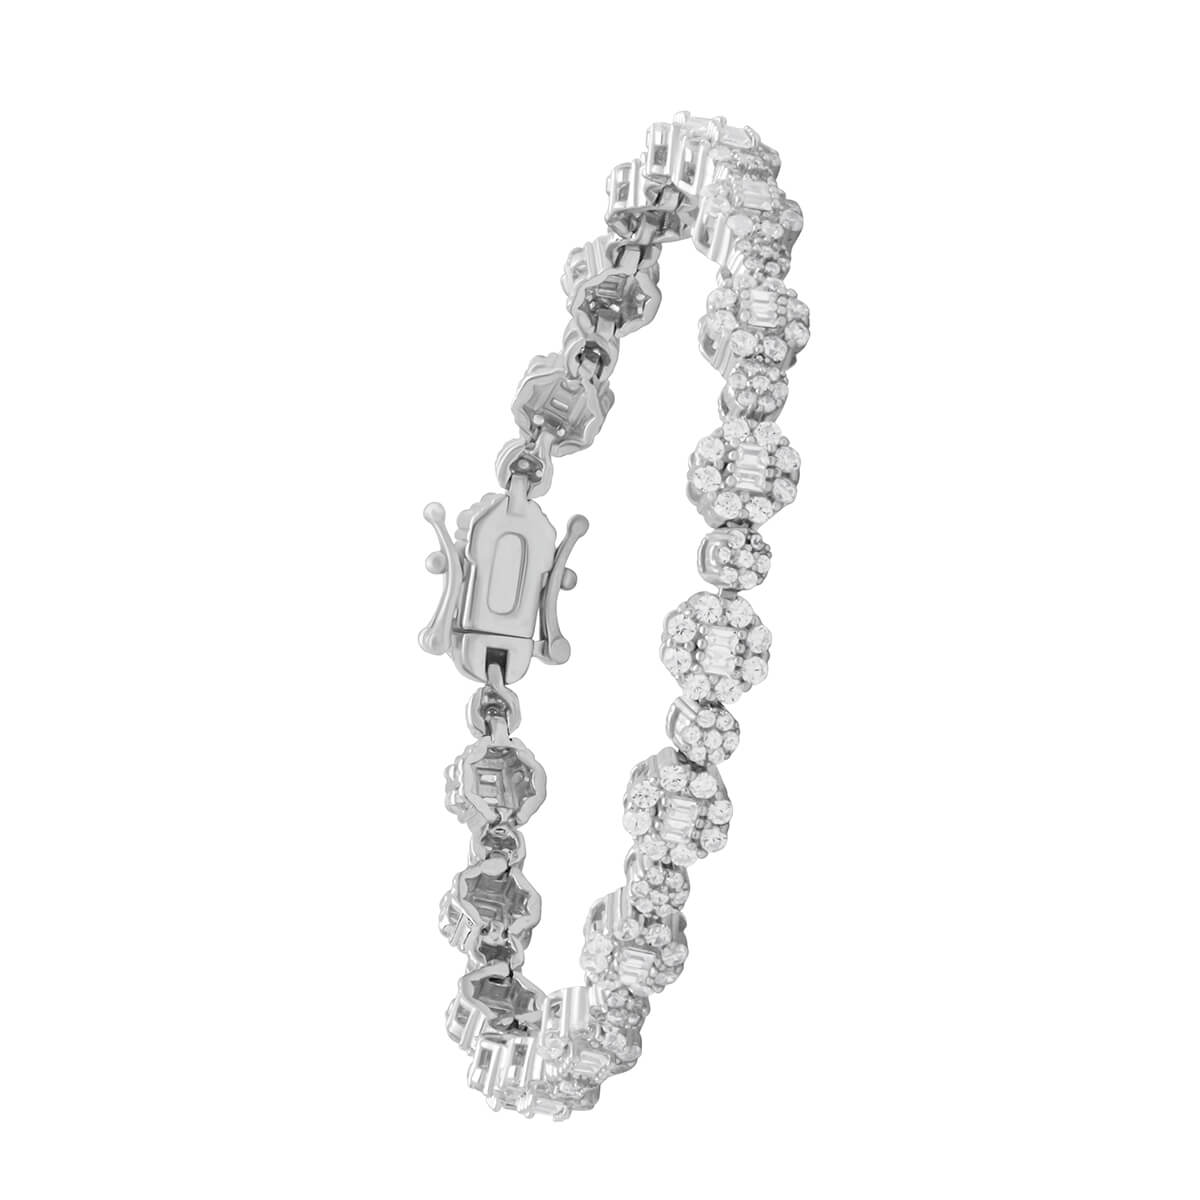 Shiny Crystal Bracelet In Silver